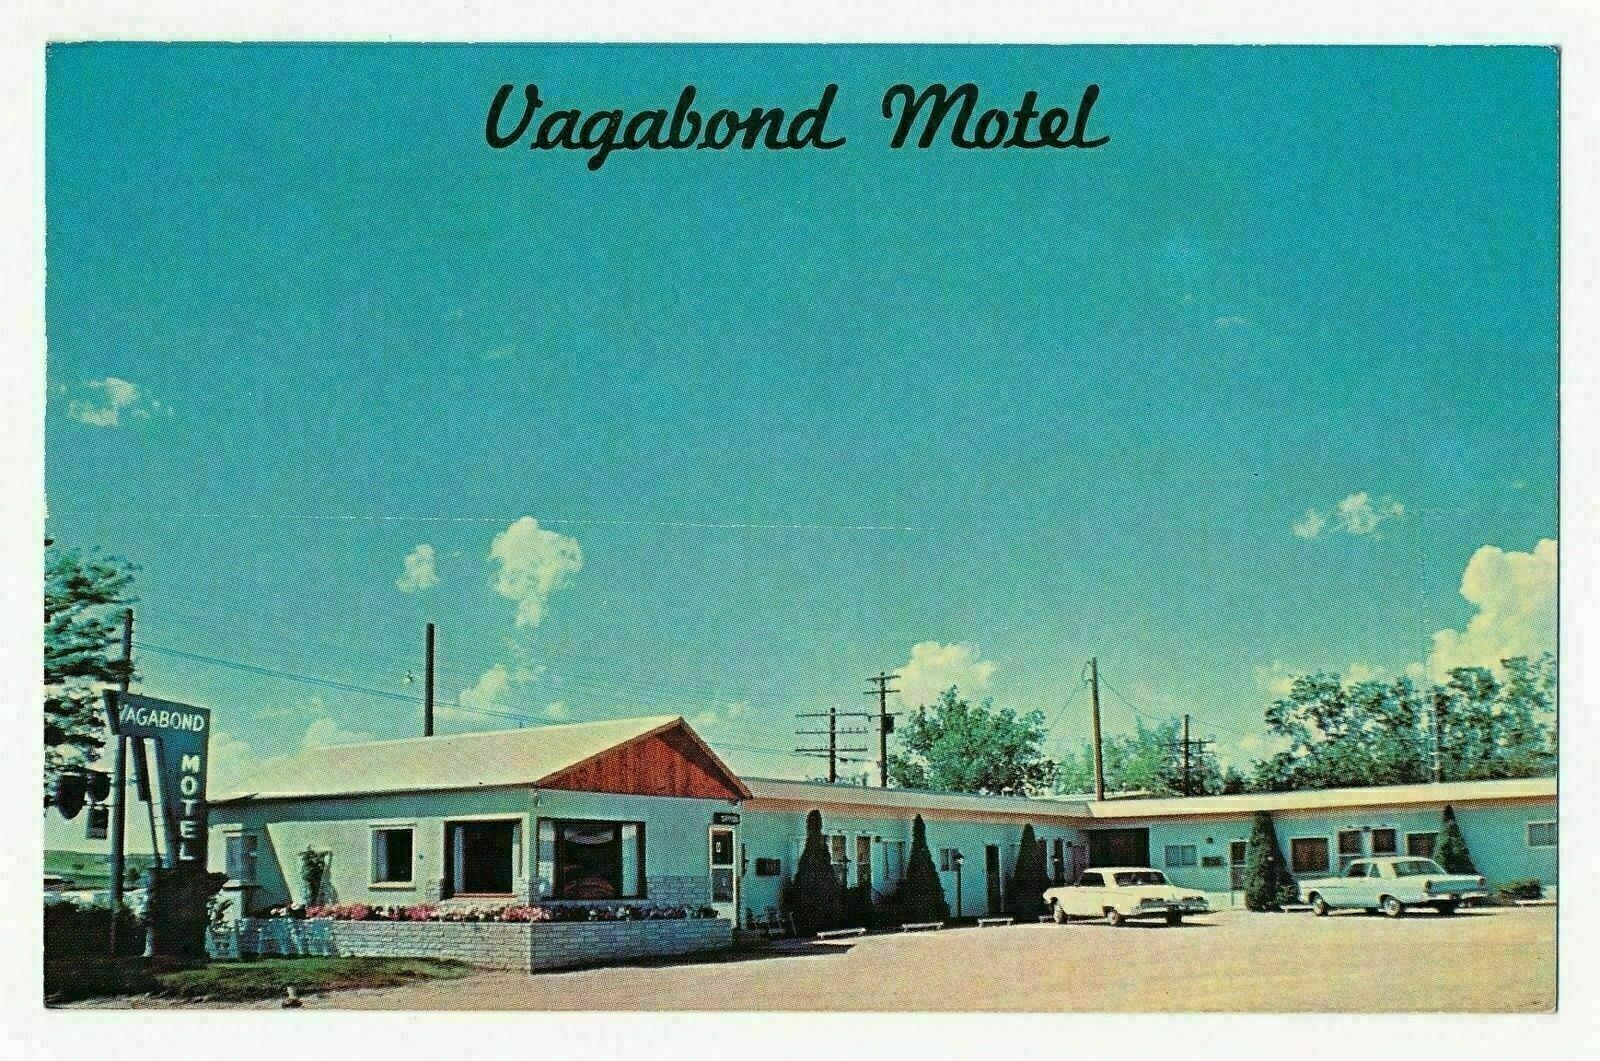 Vagabond Motel, Douglas, Wyoming